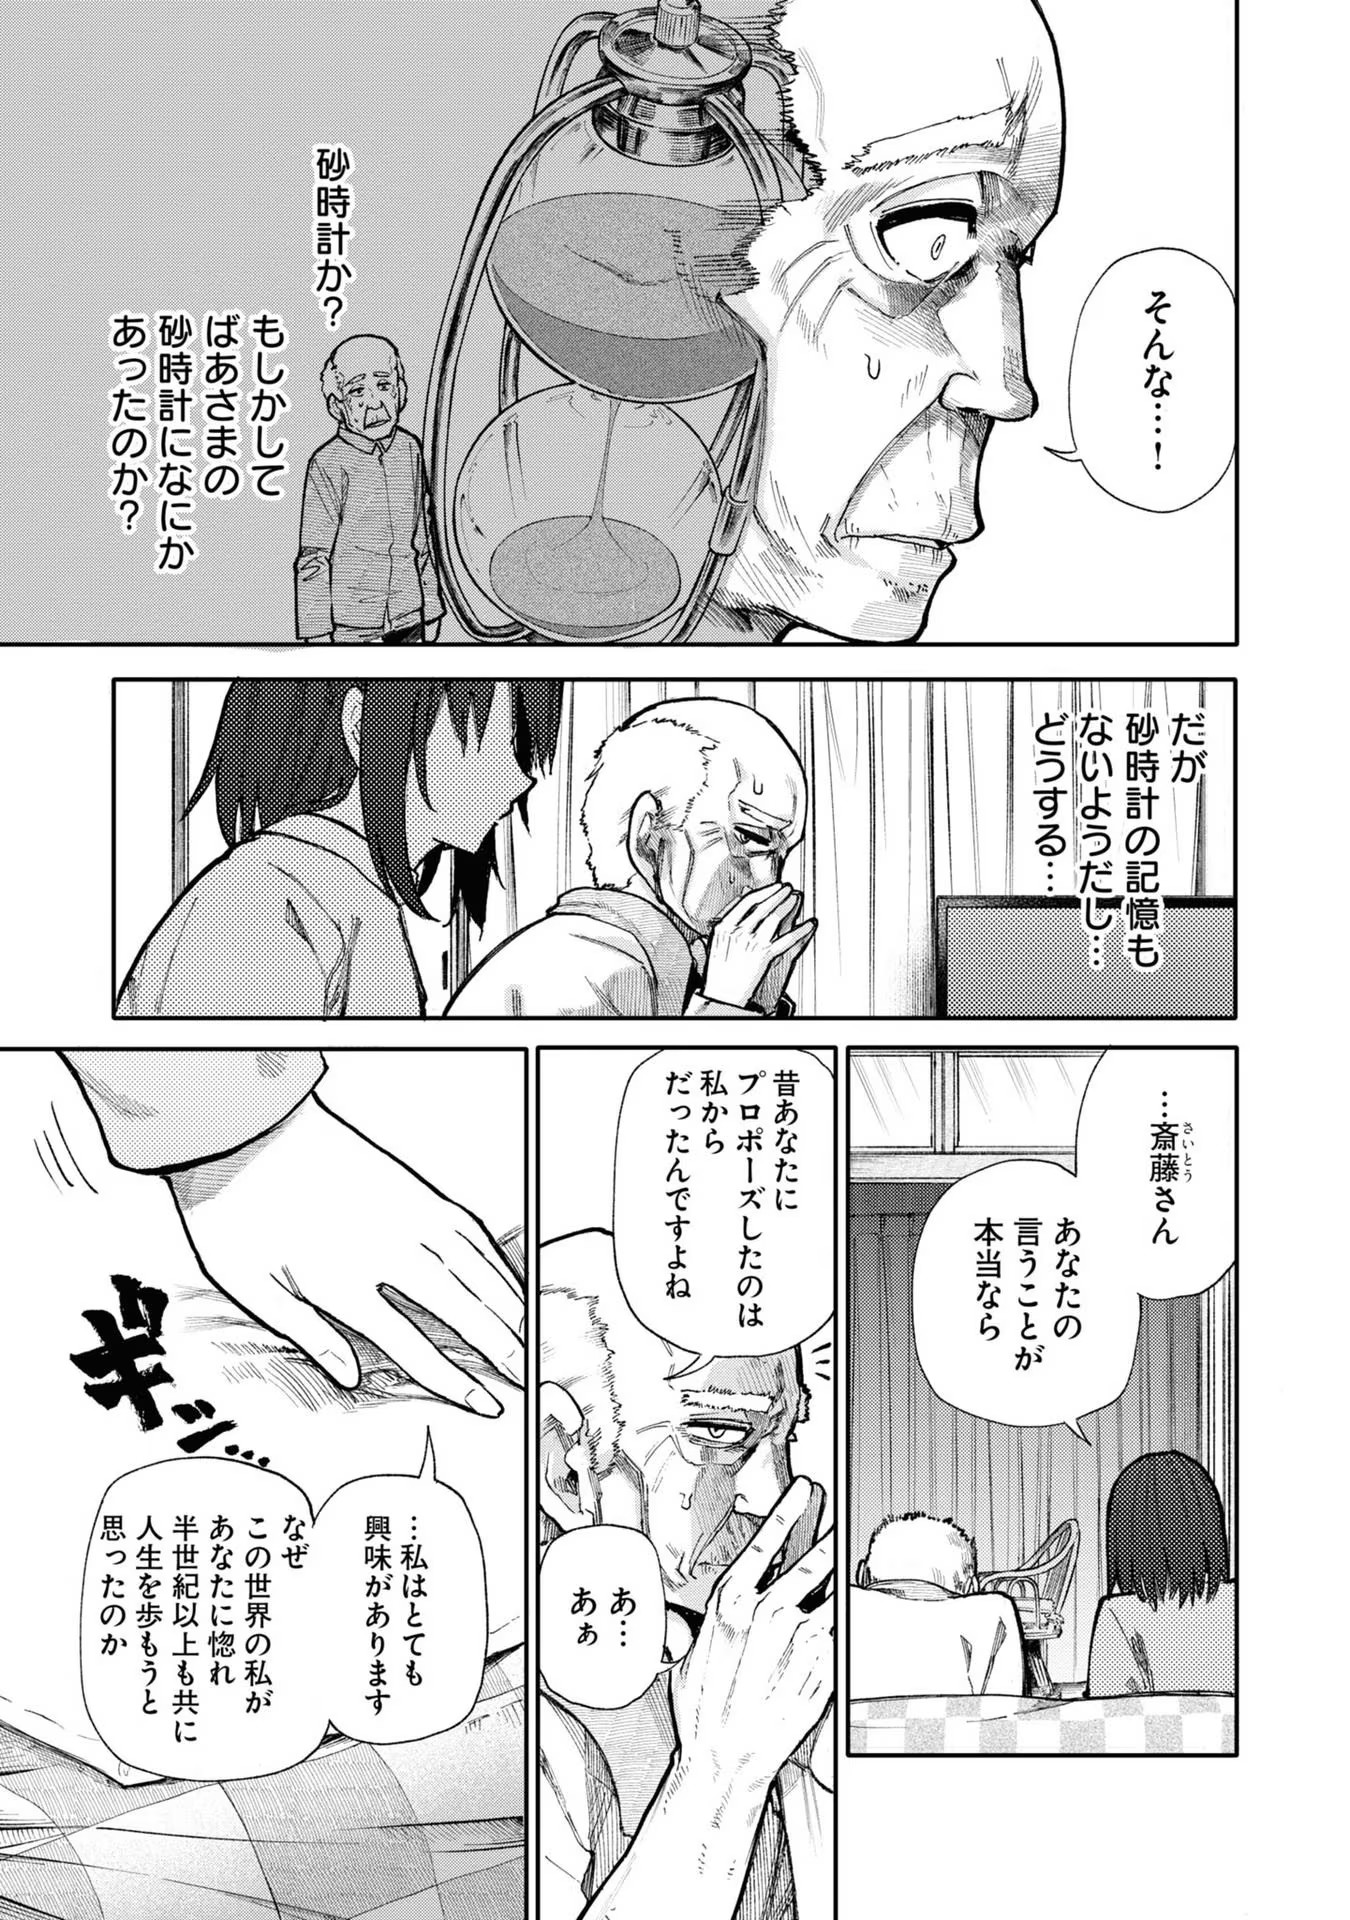 Ojii-san to Obaa-san ga Wakigaetta Hanashi - Chapter 84 - Page 3